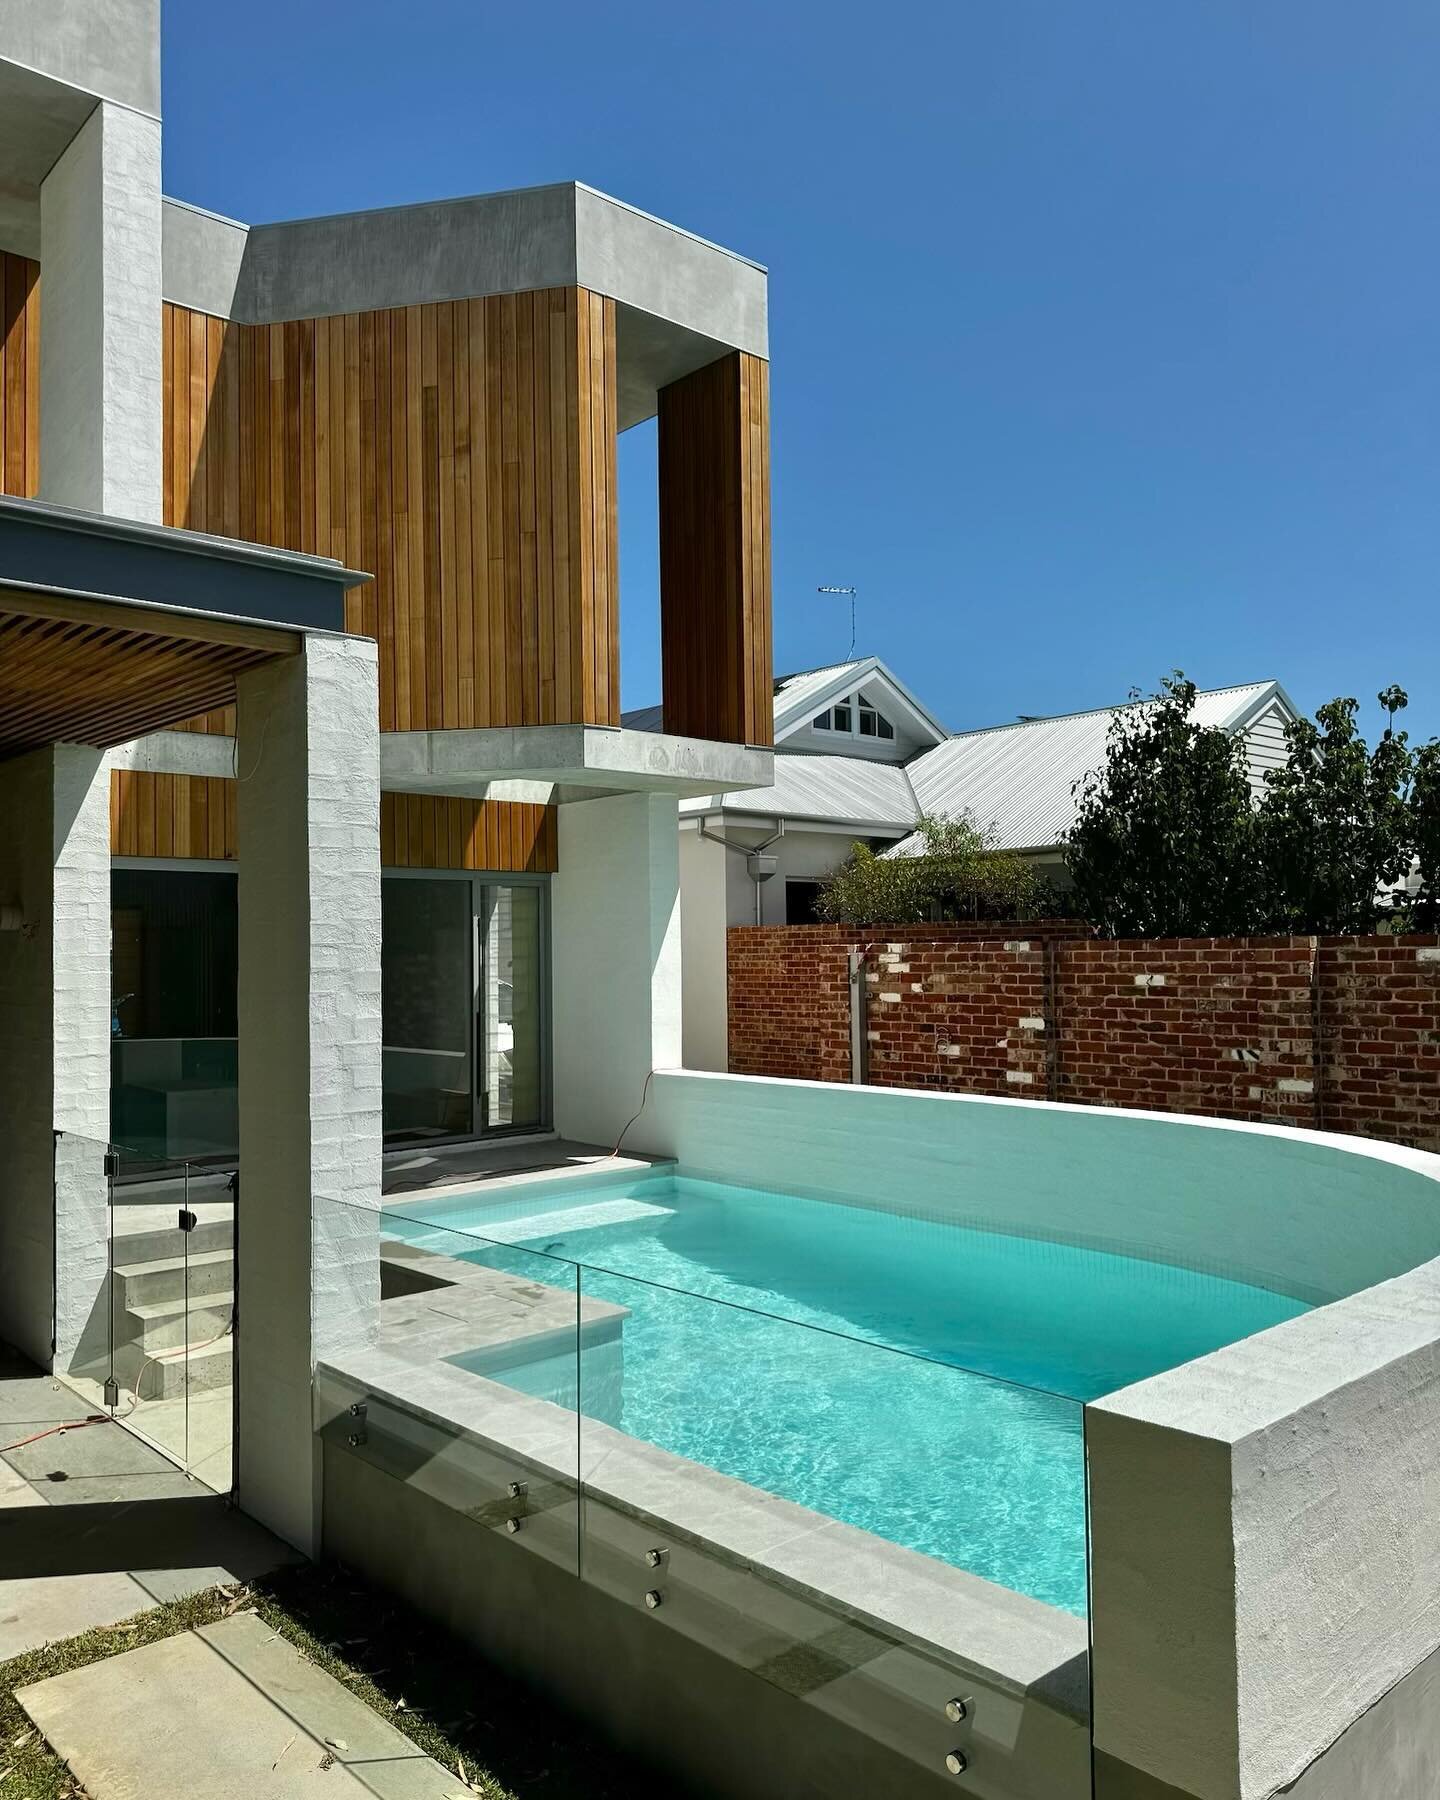 Fremantle addition&hellip; Poolside for Christmas!
Architect | @caststudio_architects